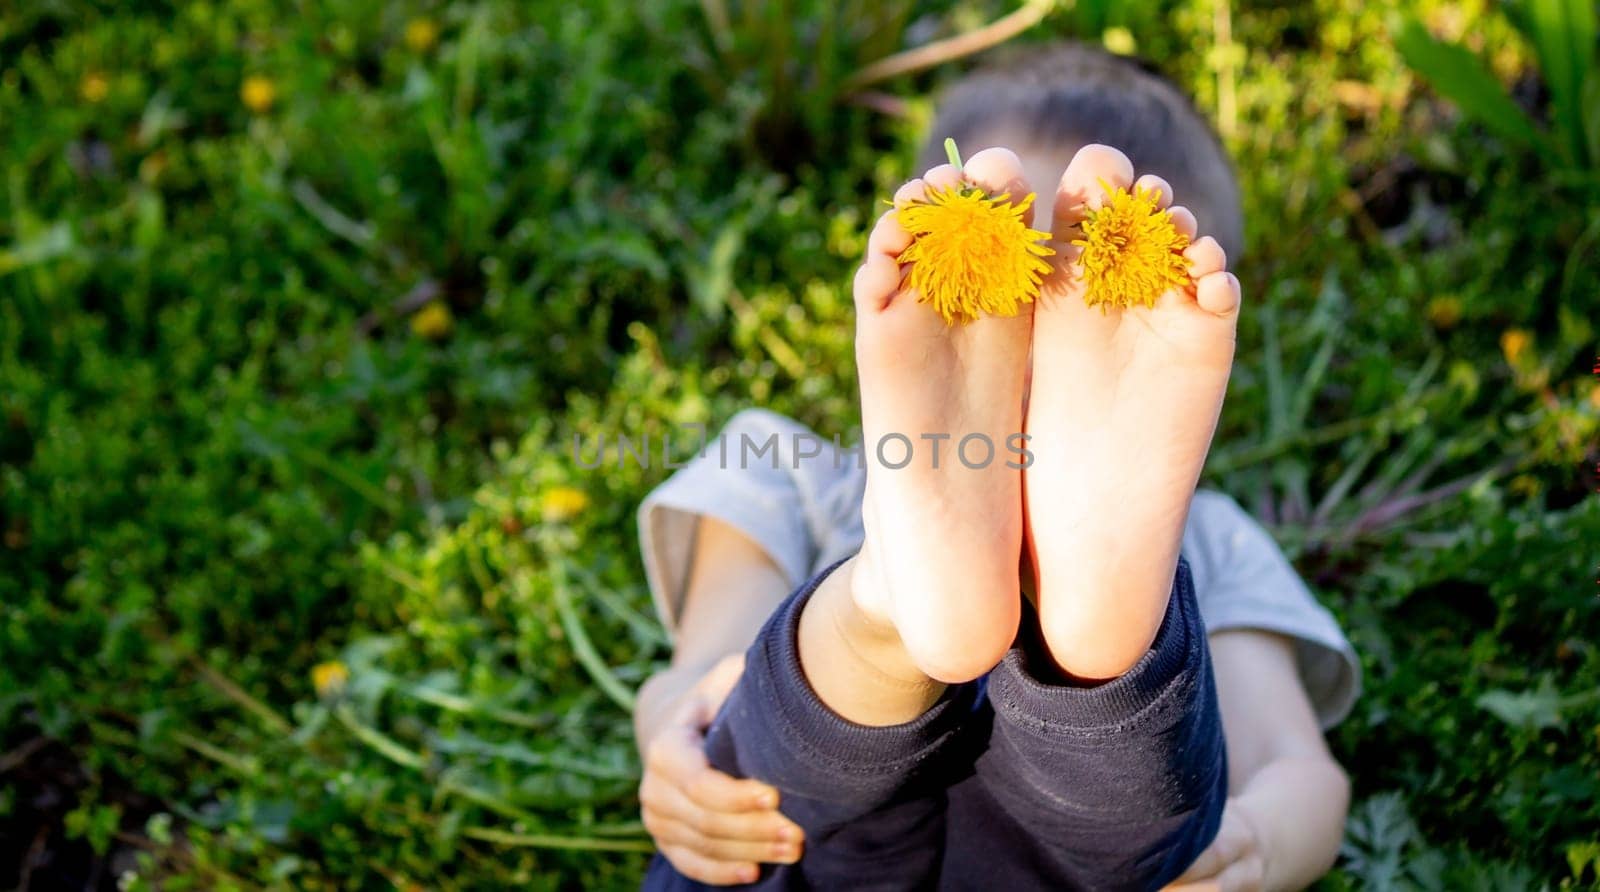 Dandelion baby legs, spring sunny weather. selective focus